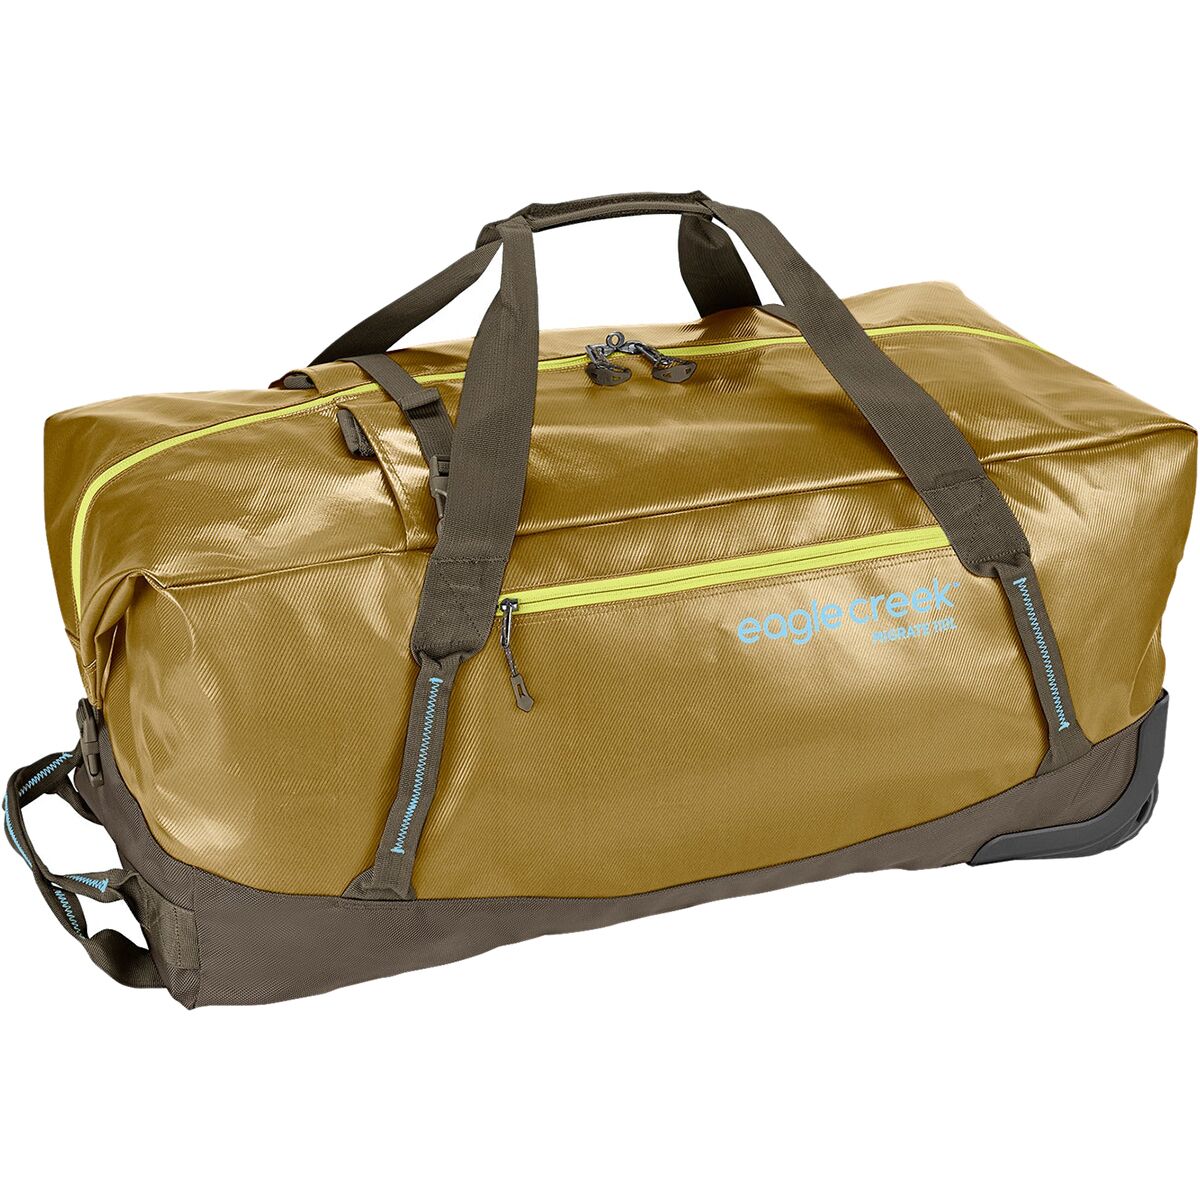 Migrate 110L Wheeled Duffel Bag